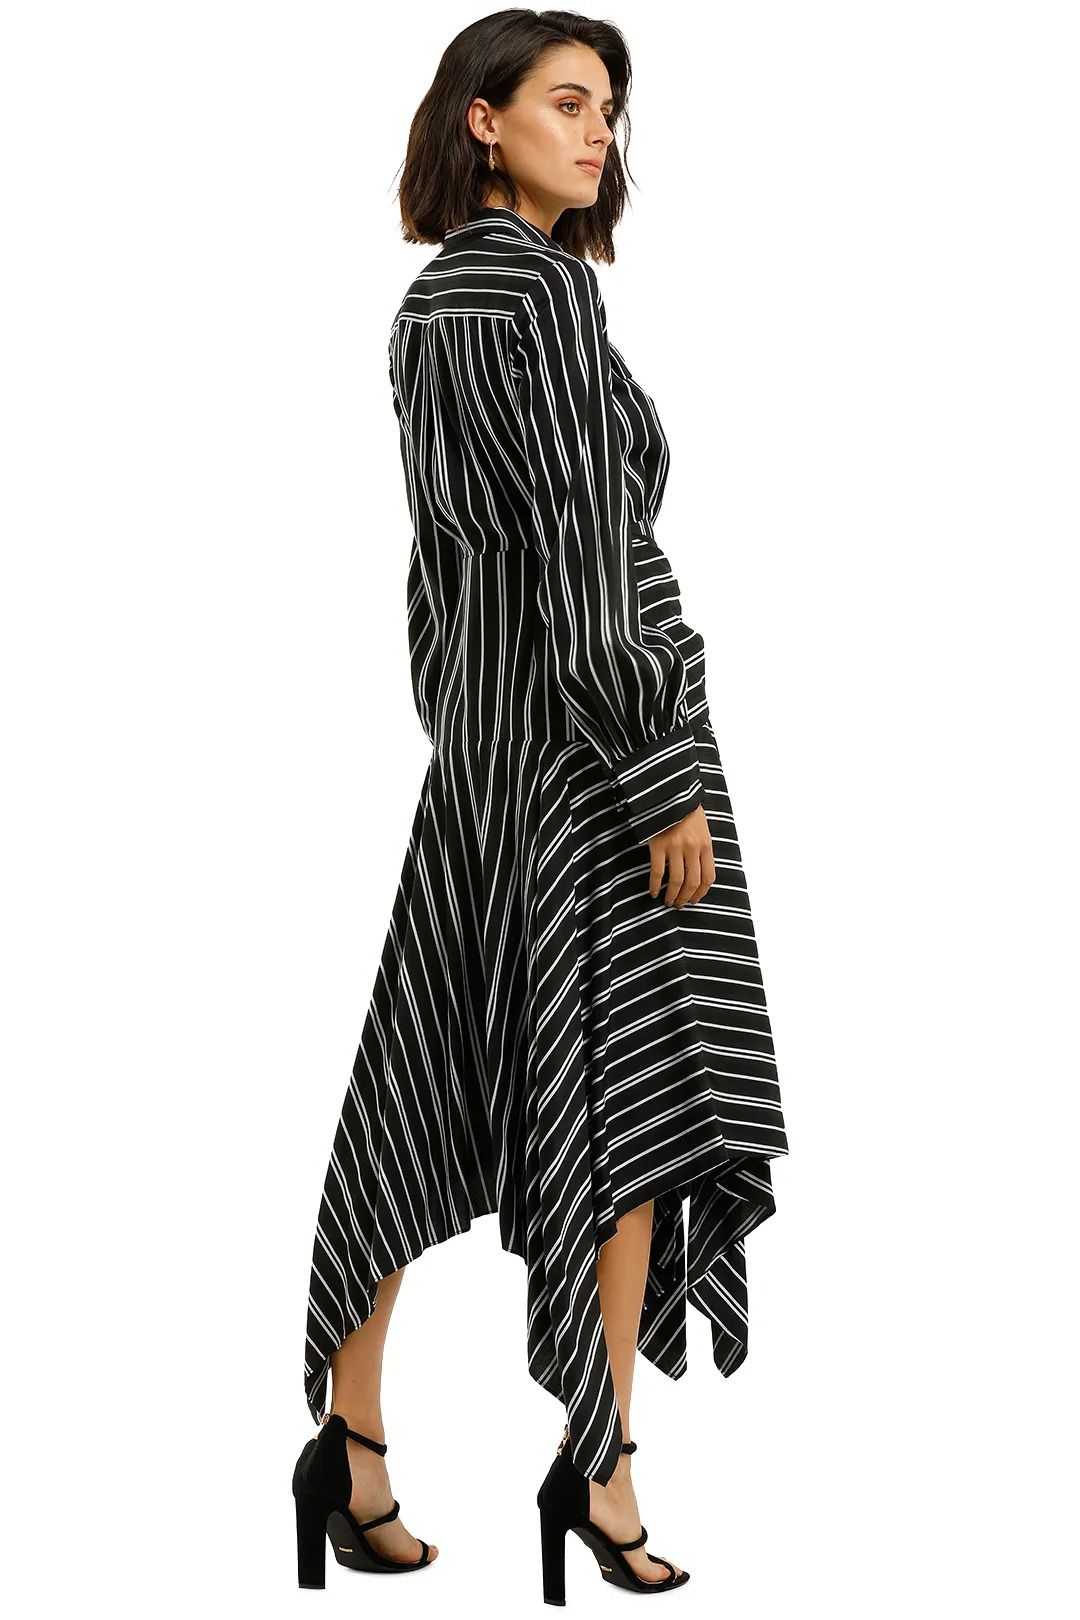 Navy stripe Cresler dress with asymmetrical hemline available for rent.